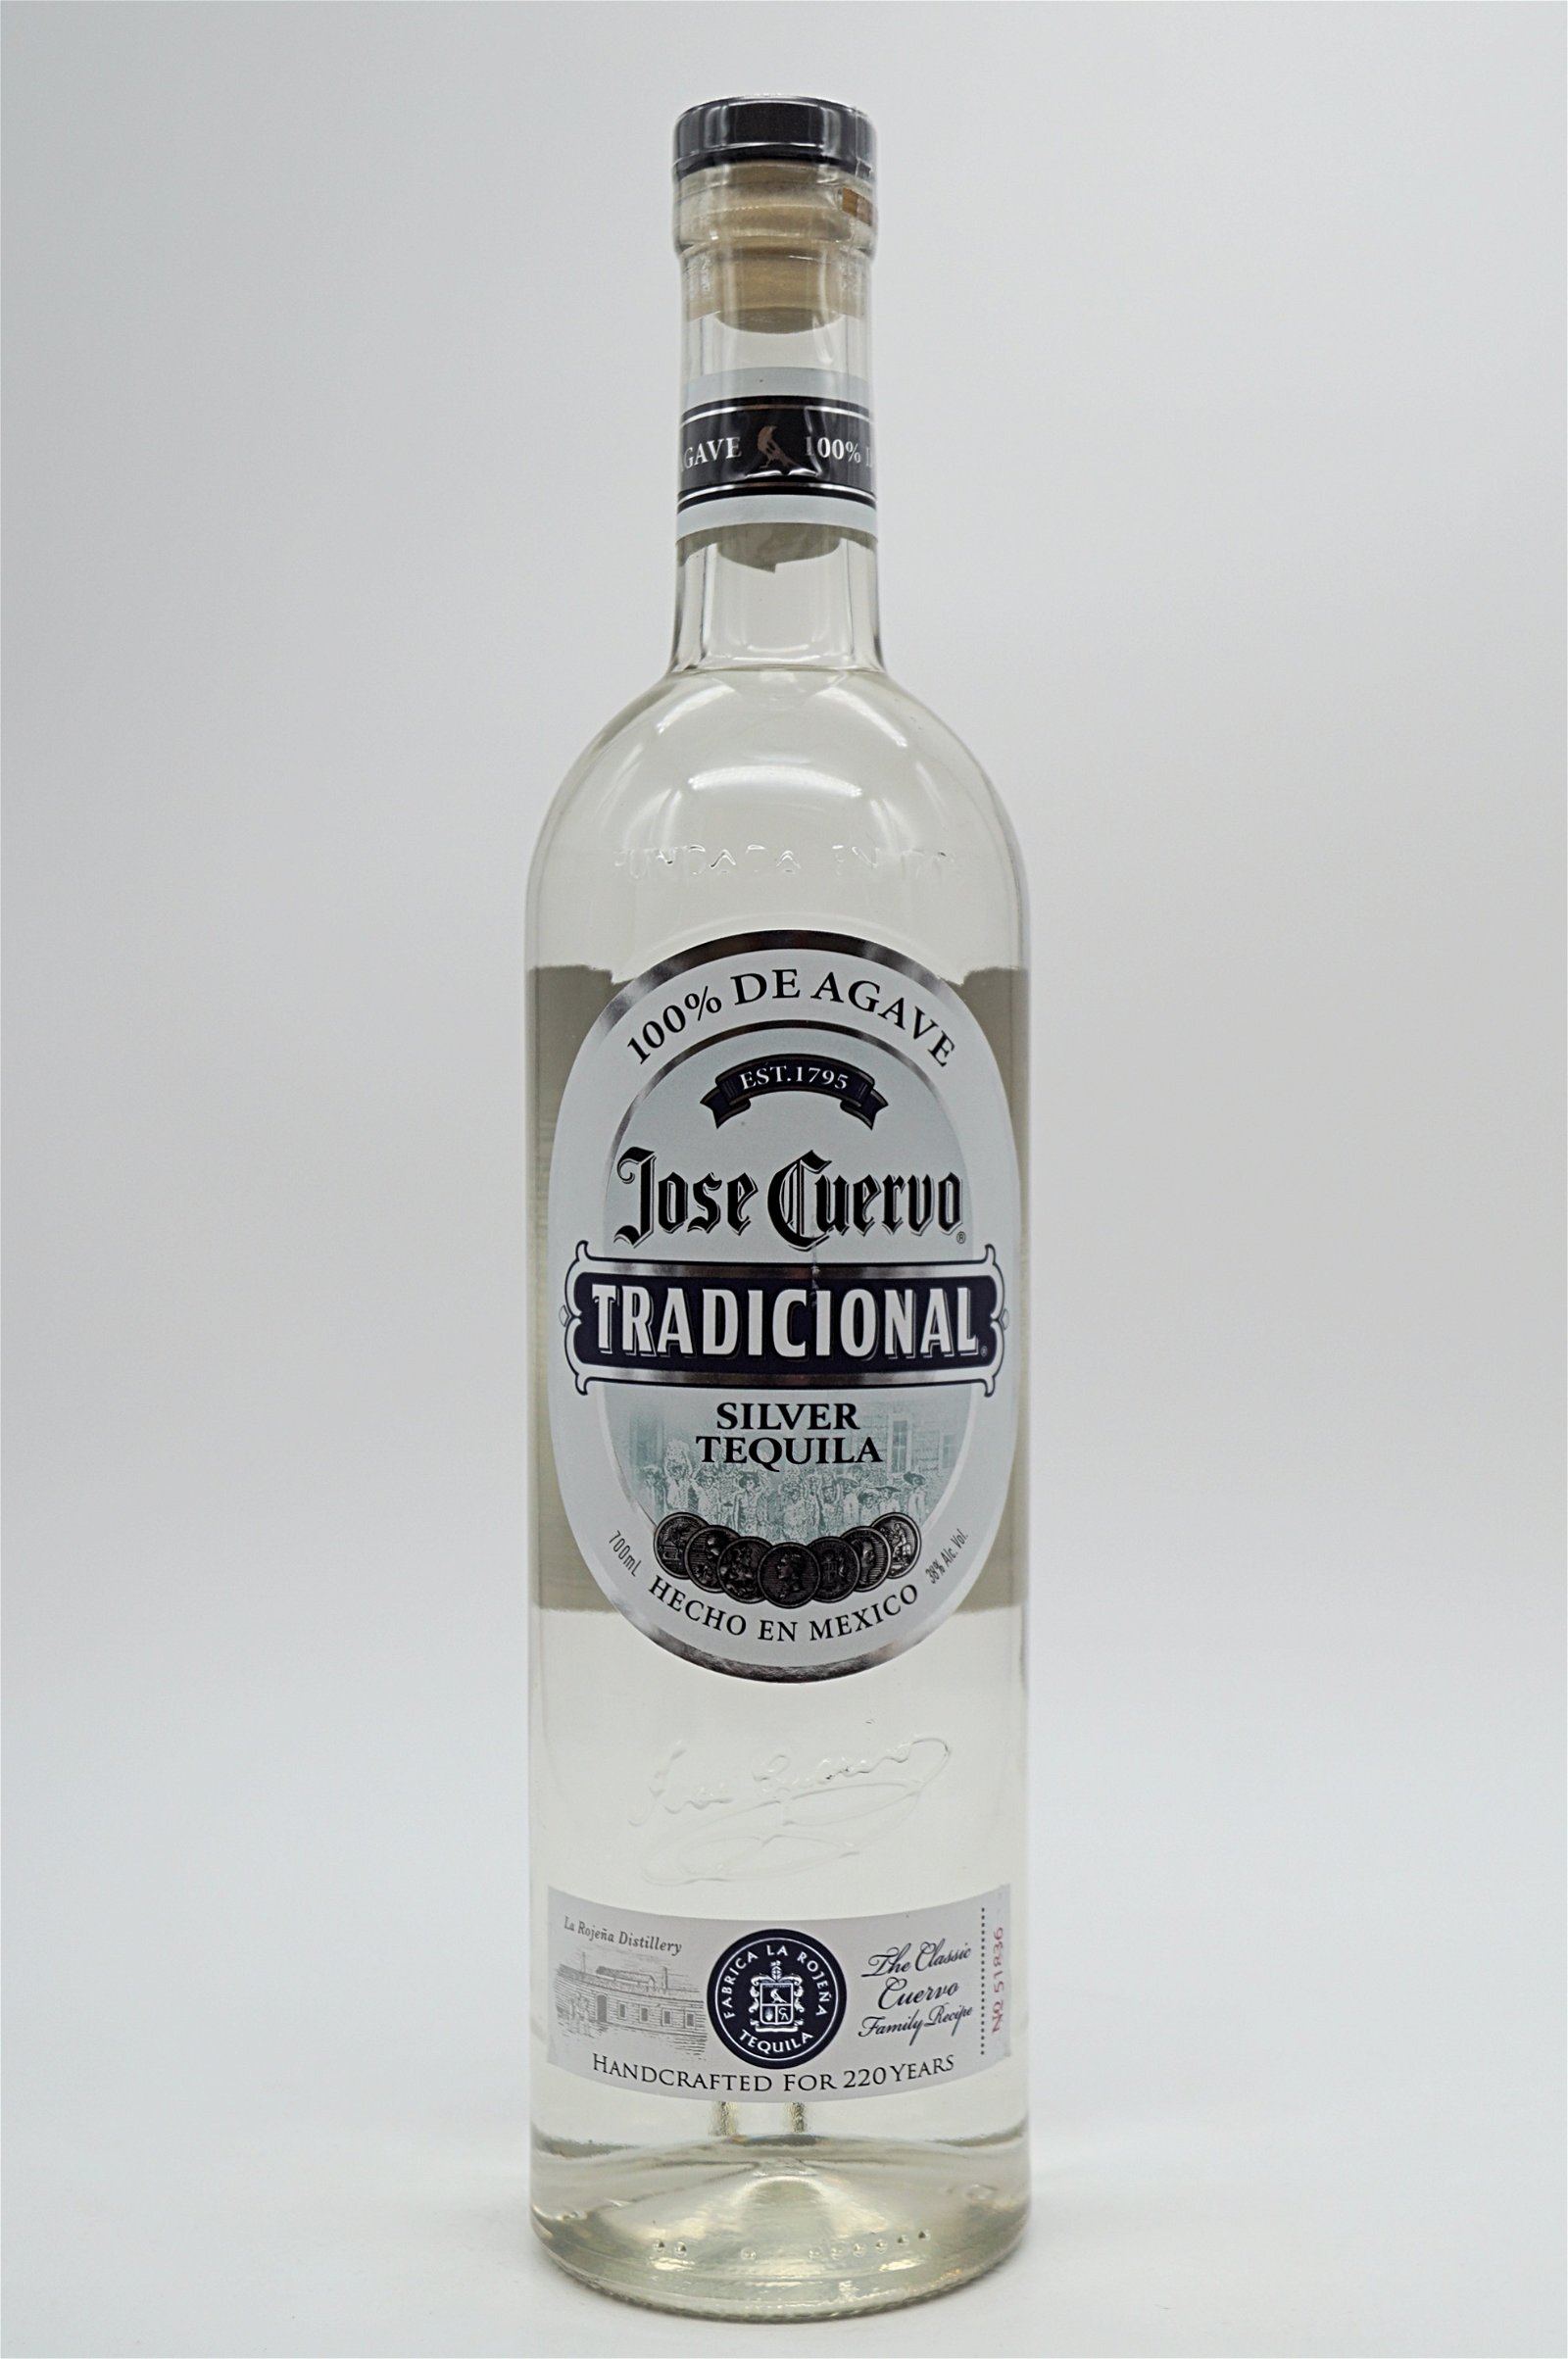 Jose Cuervo Tequila Tradicional Silver